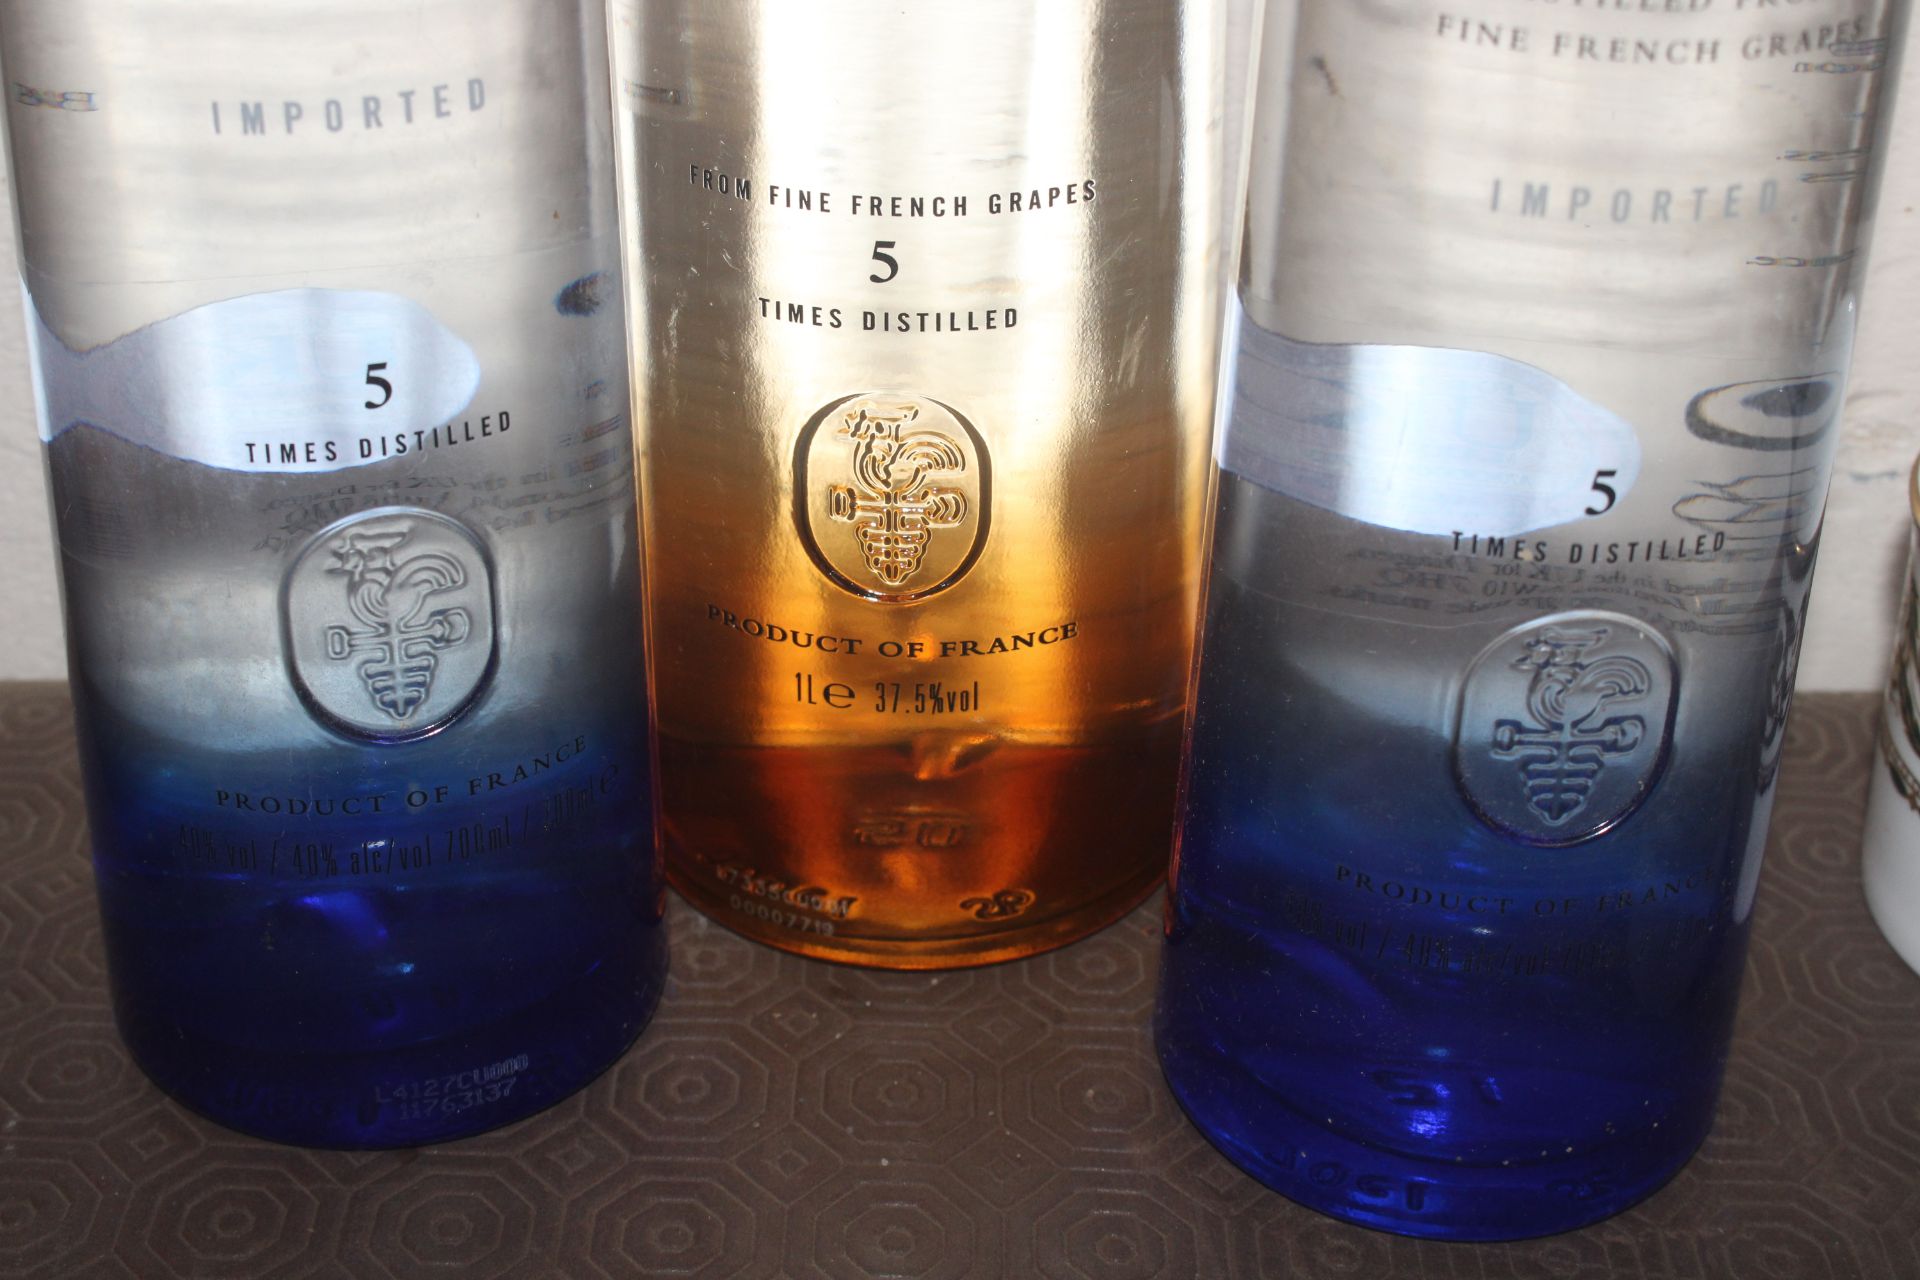 Three bottles of Ciroc Vodka - Image 2 of 2